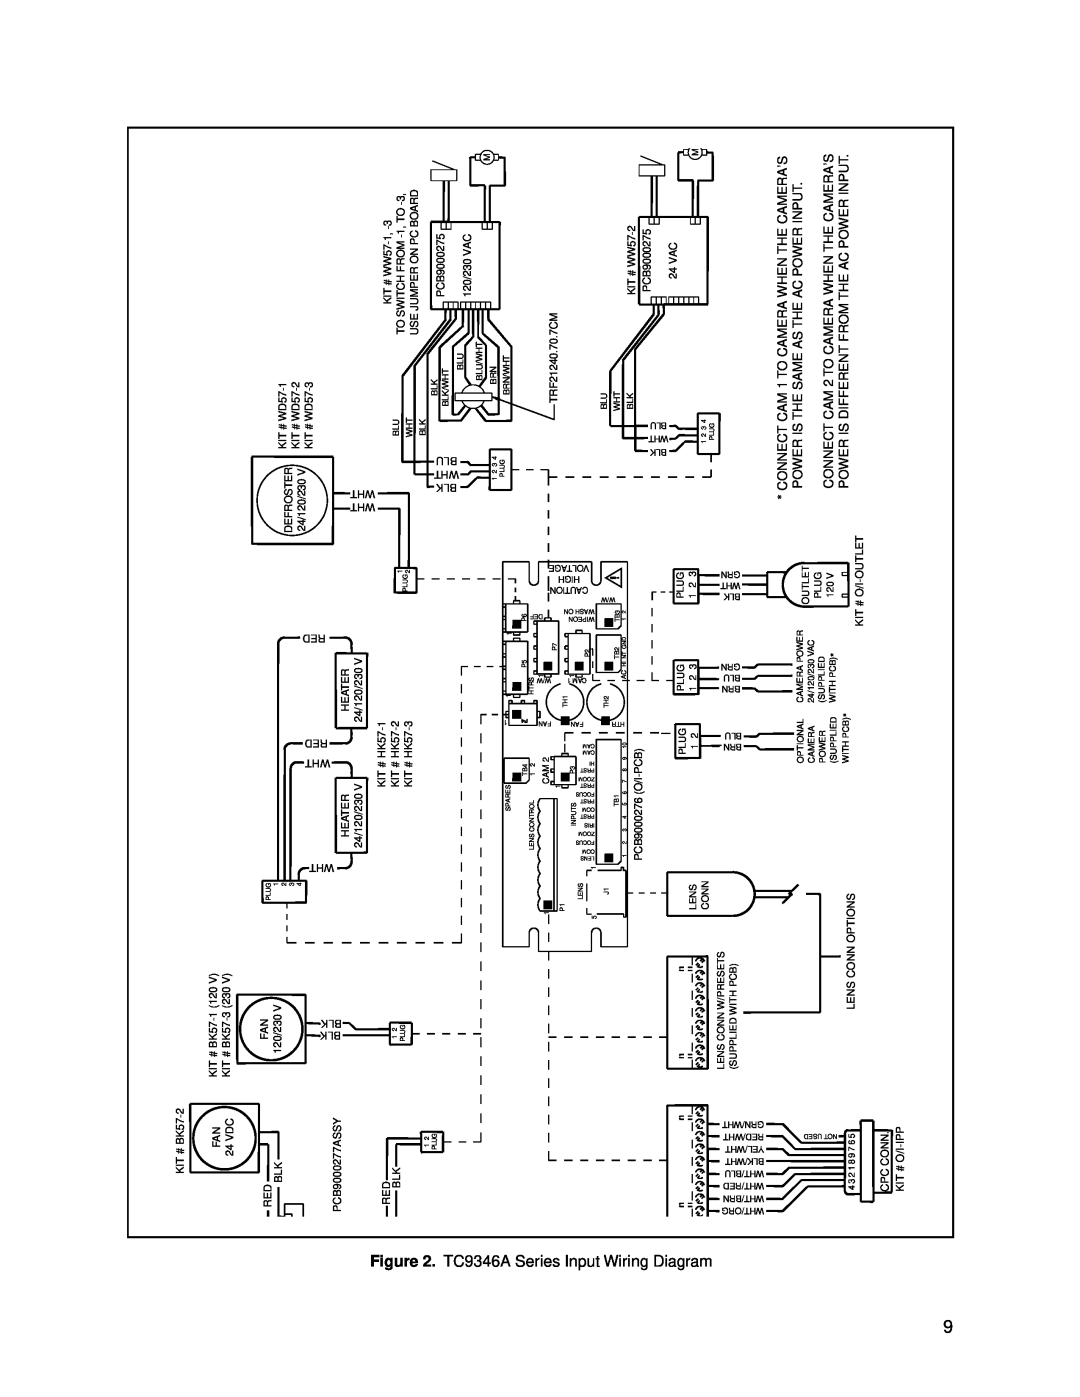 Bosch Appliances tc9346a instruction manual TC9346A Series Input Wiring, Blu/Wht 